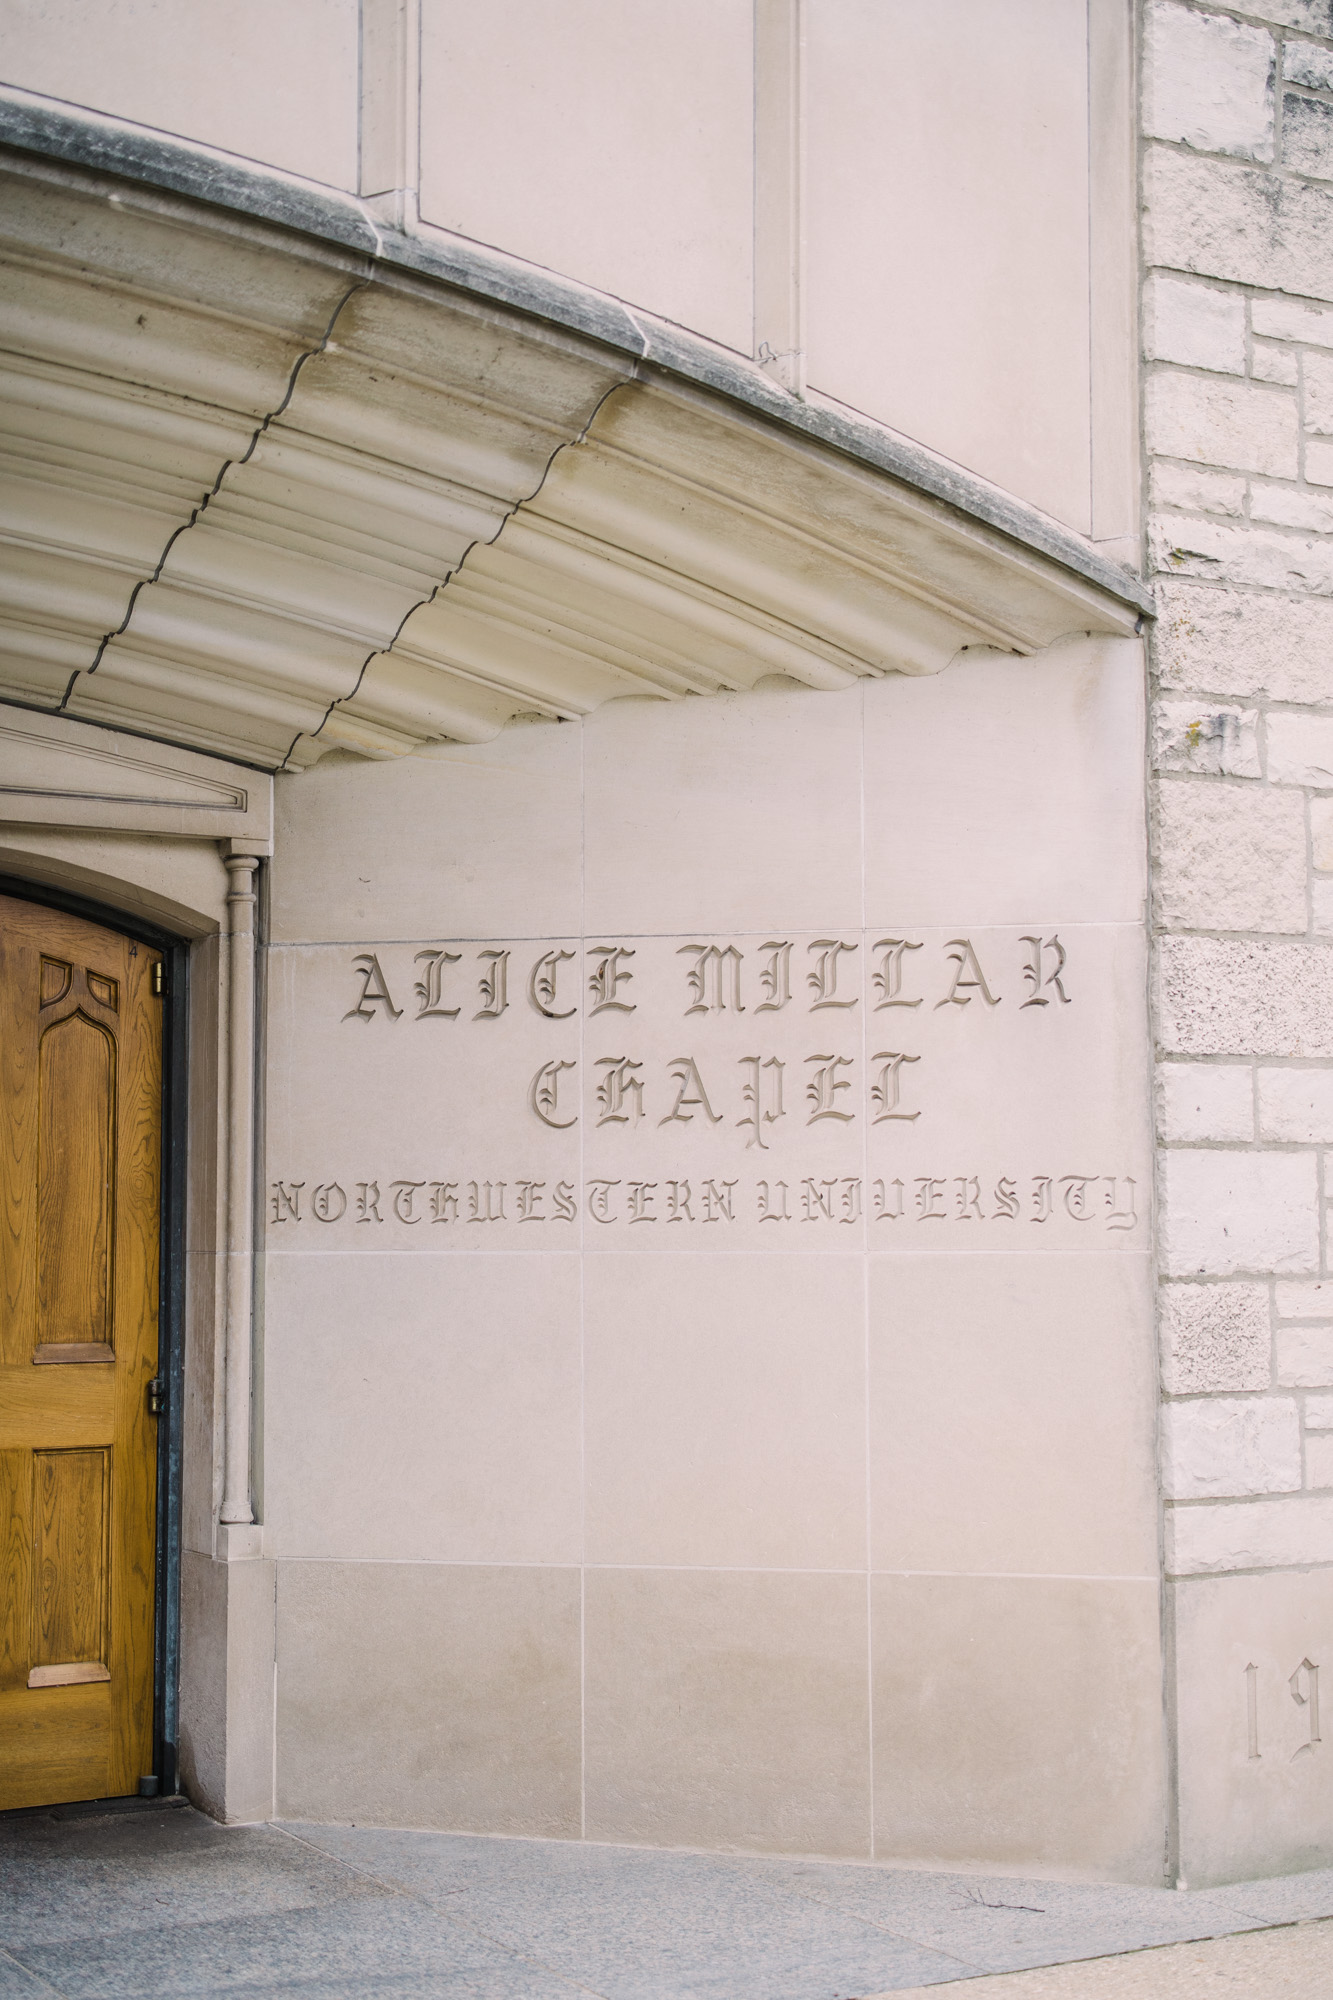 Alice Millar Chapel at Northwestern University in Evanston, IL.